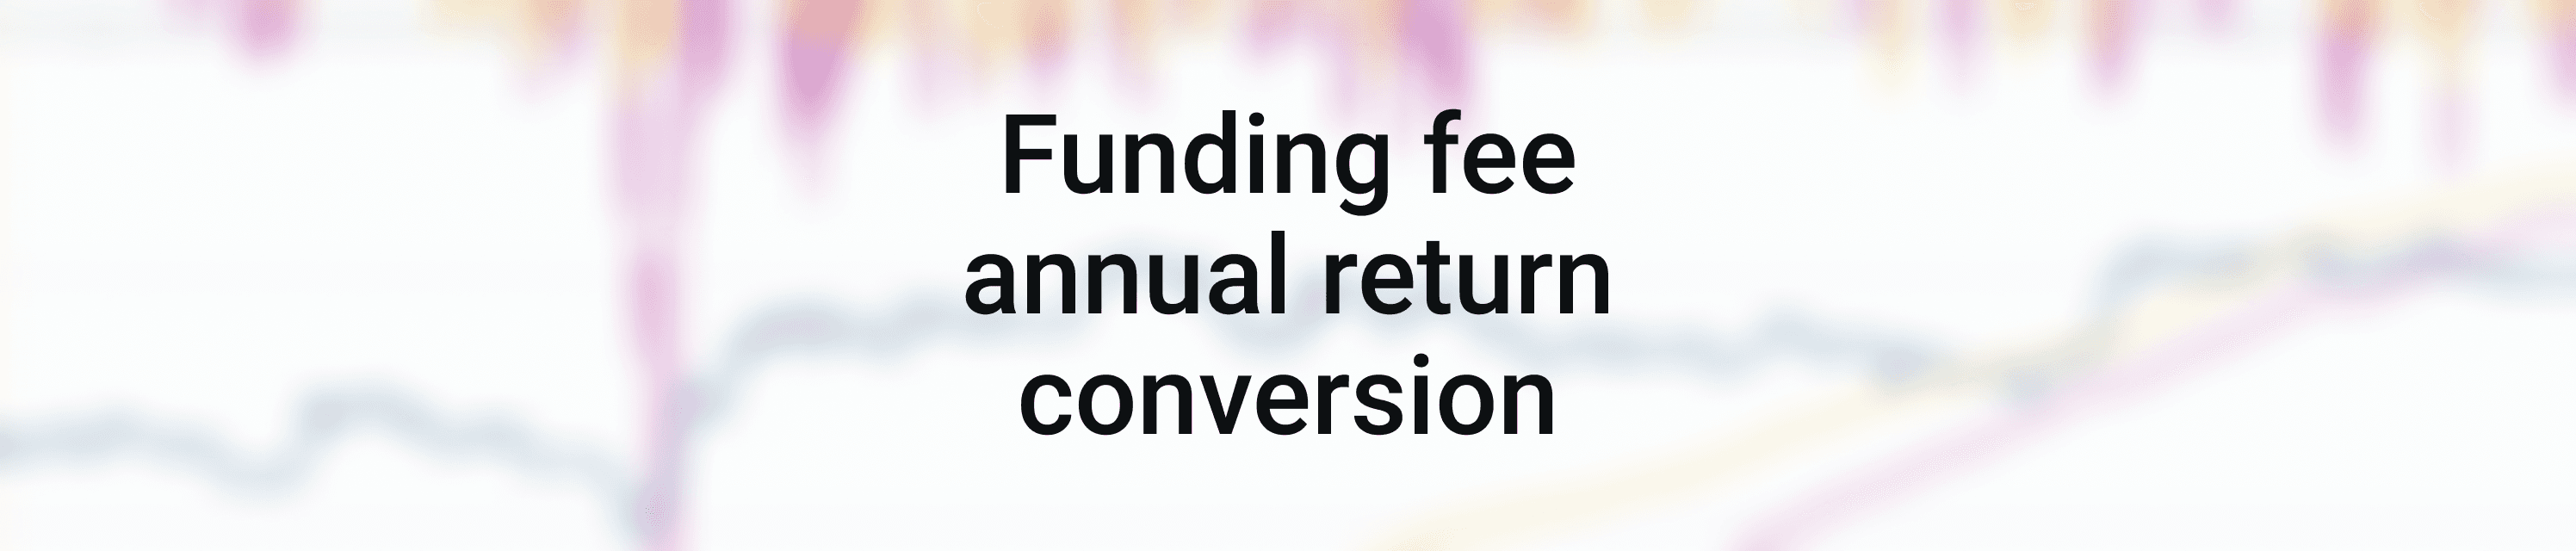 Funding fee annual return conversion